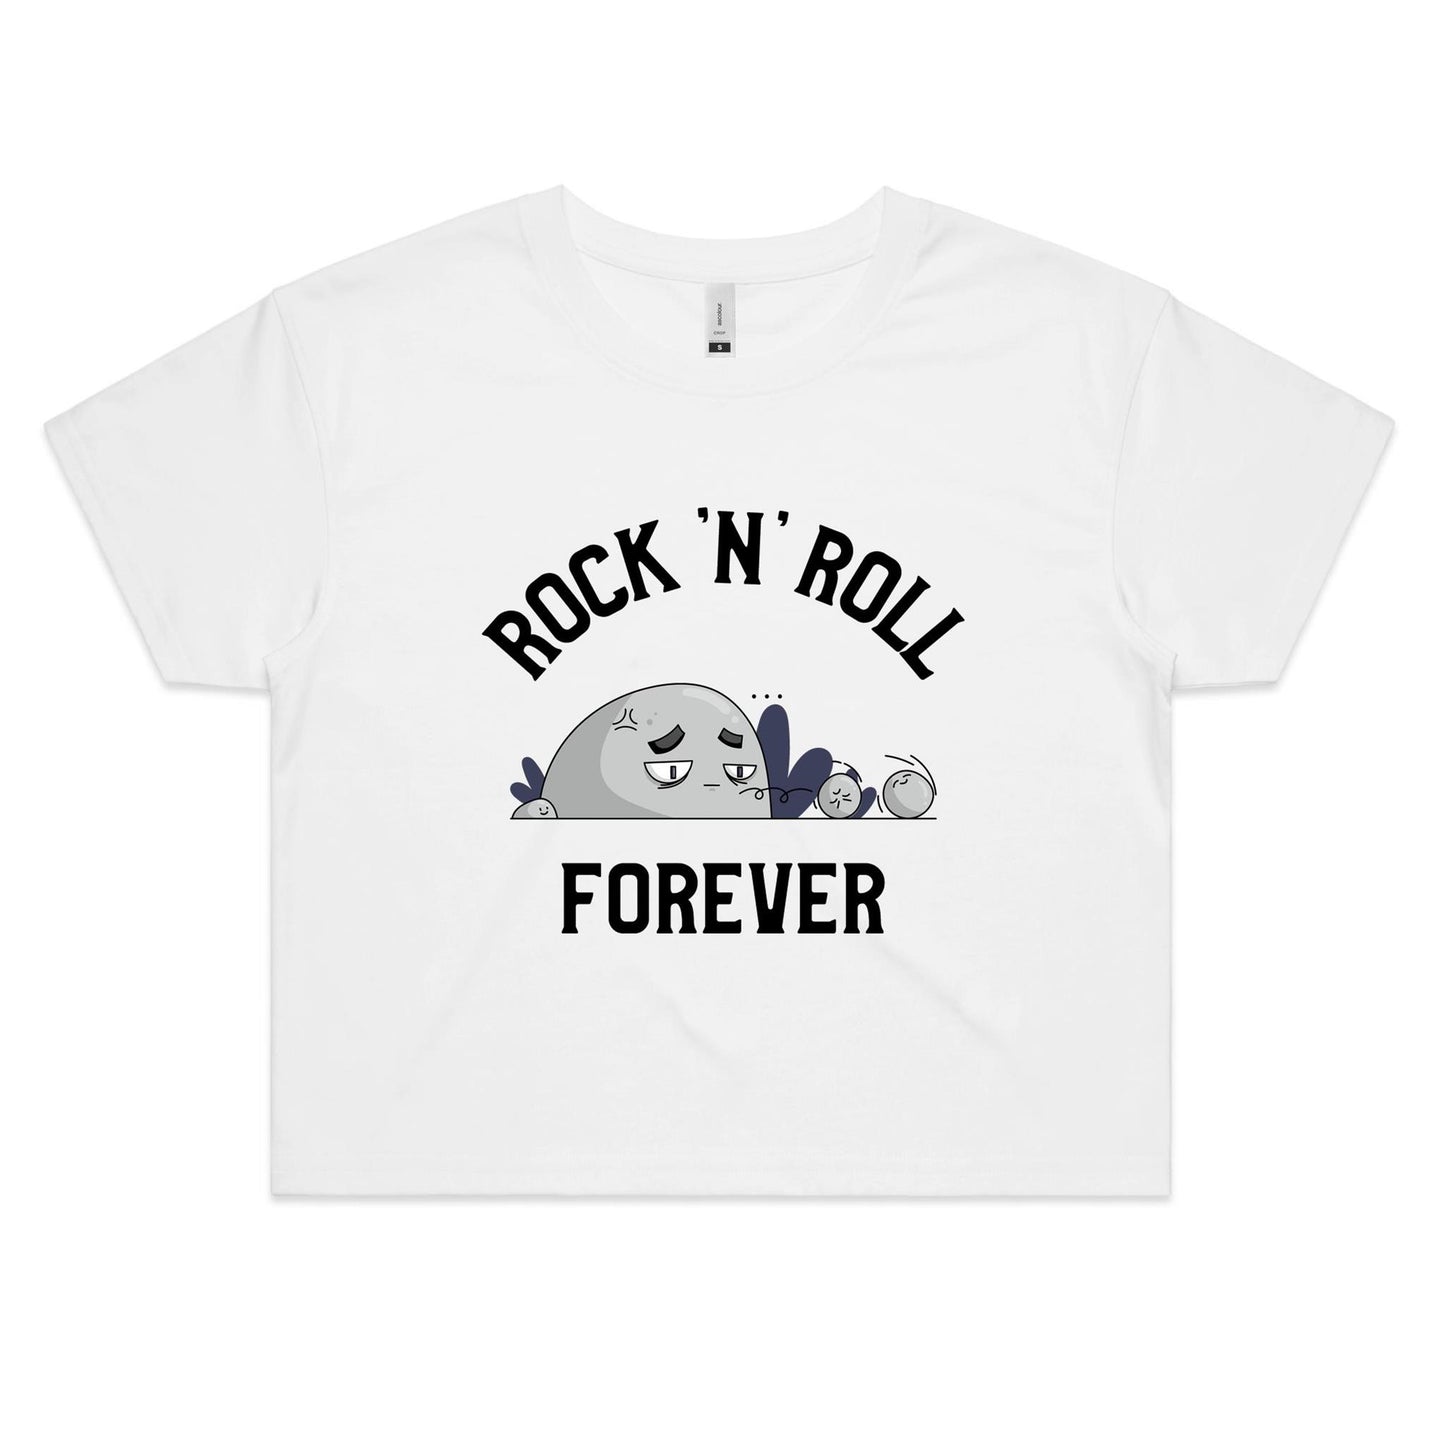 Rock 'N' Roll Forever - Women's Crop Tee White Womens Crop Top Music